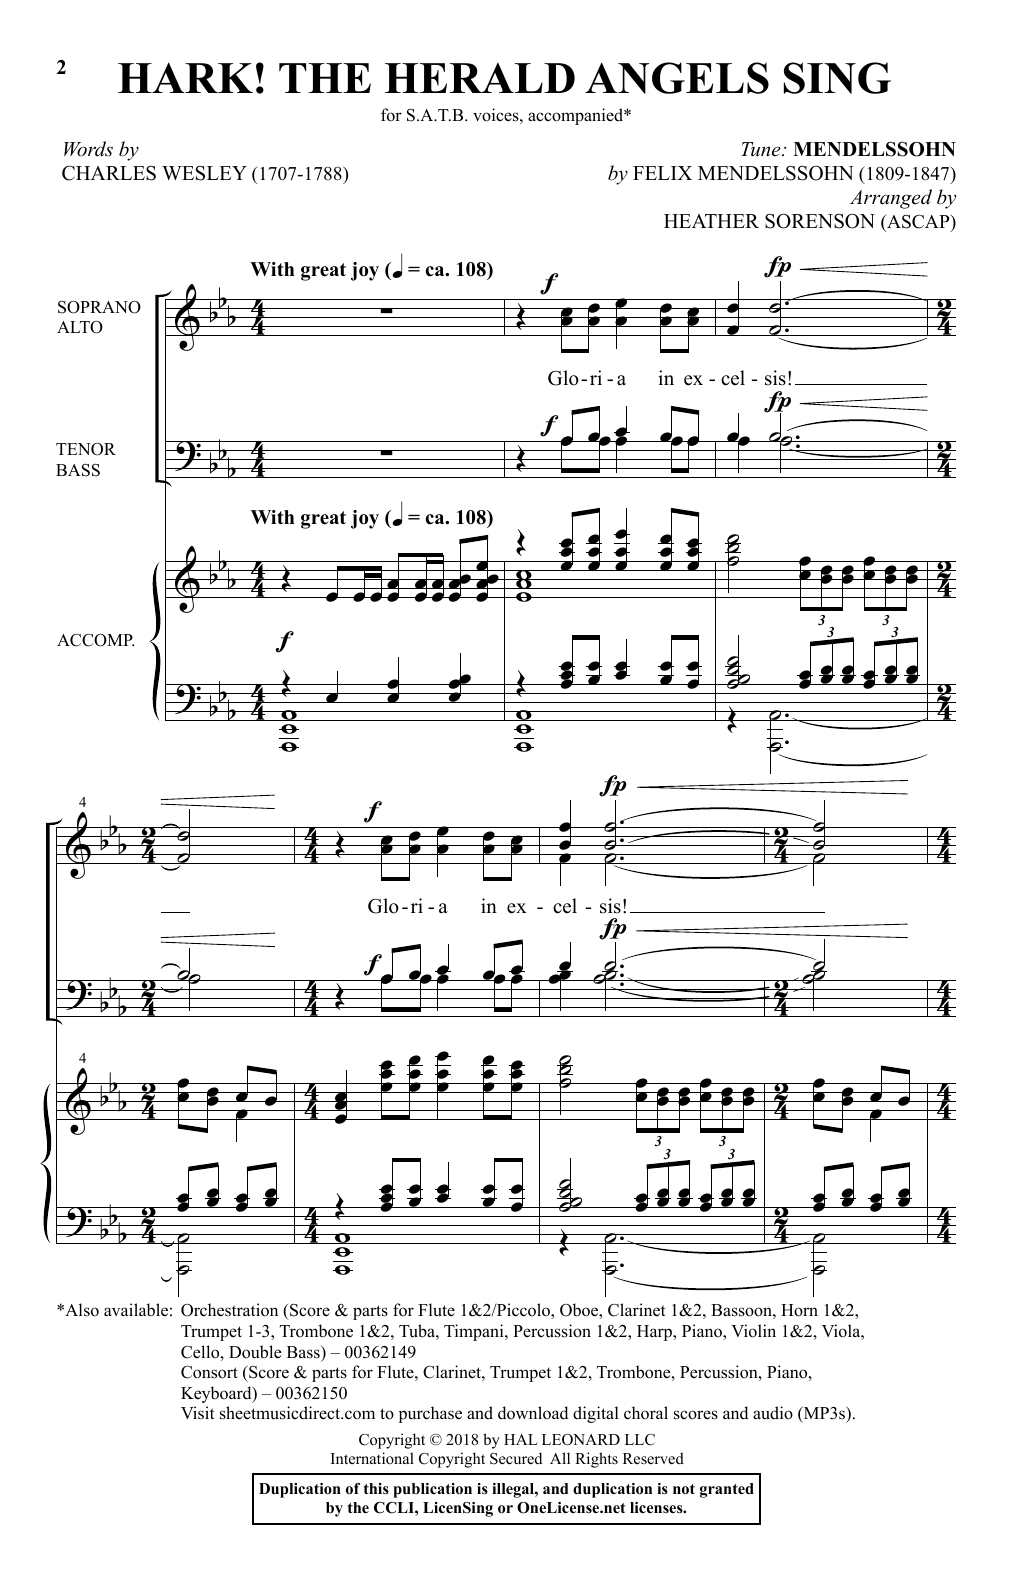 Felix Mendelssohn Hark! The Herald Angels Sing (arr. Heather Sorenson) Sheet Music Notes & Chords for SATB Choir - Download or Print PDF